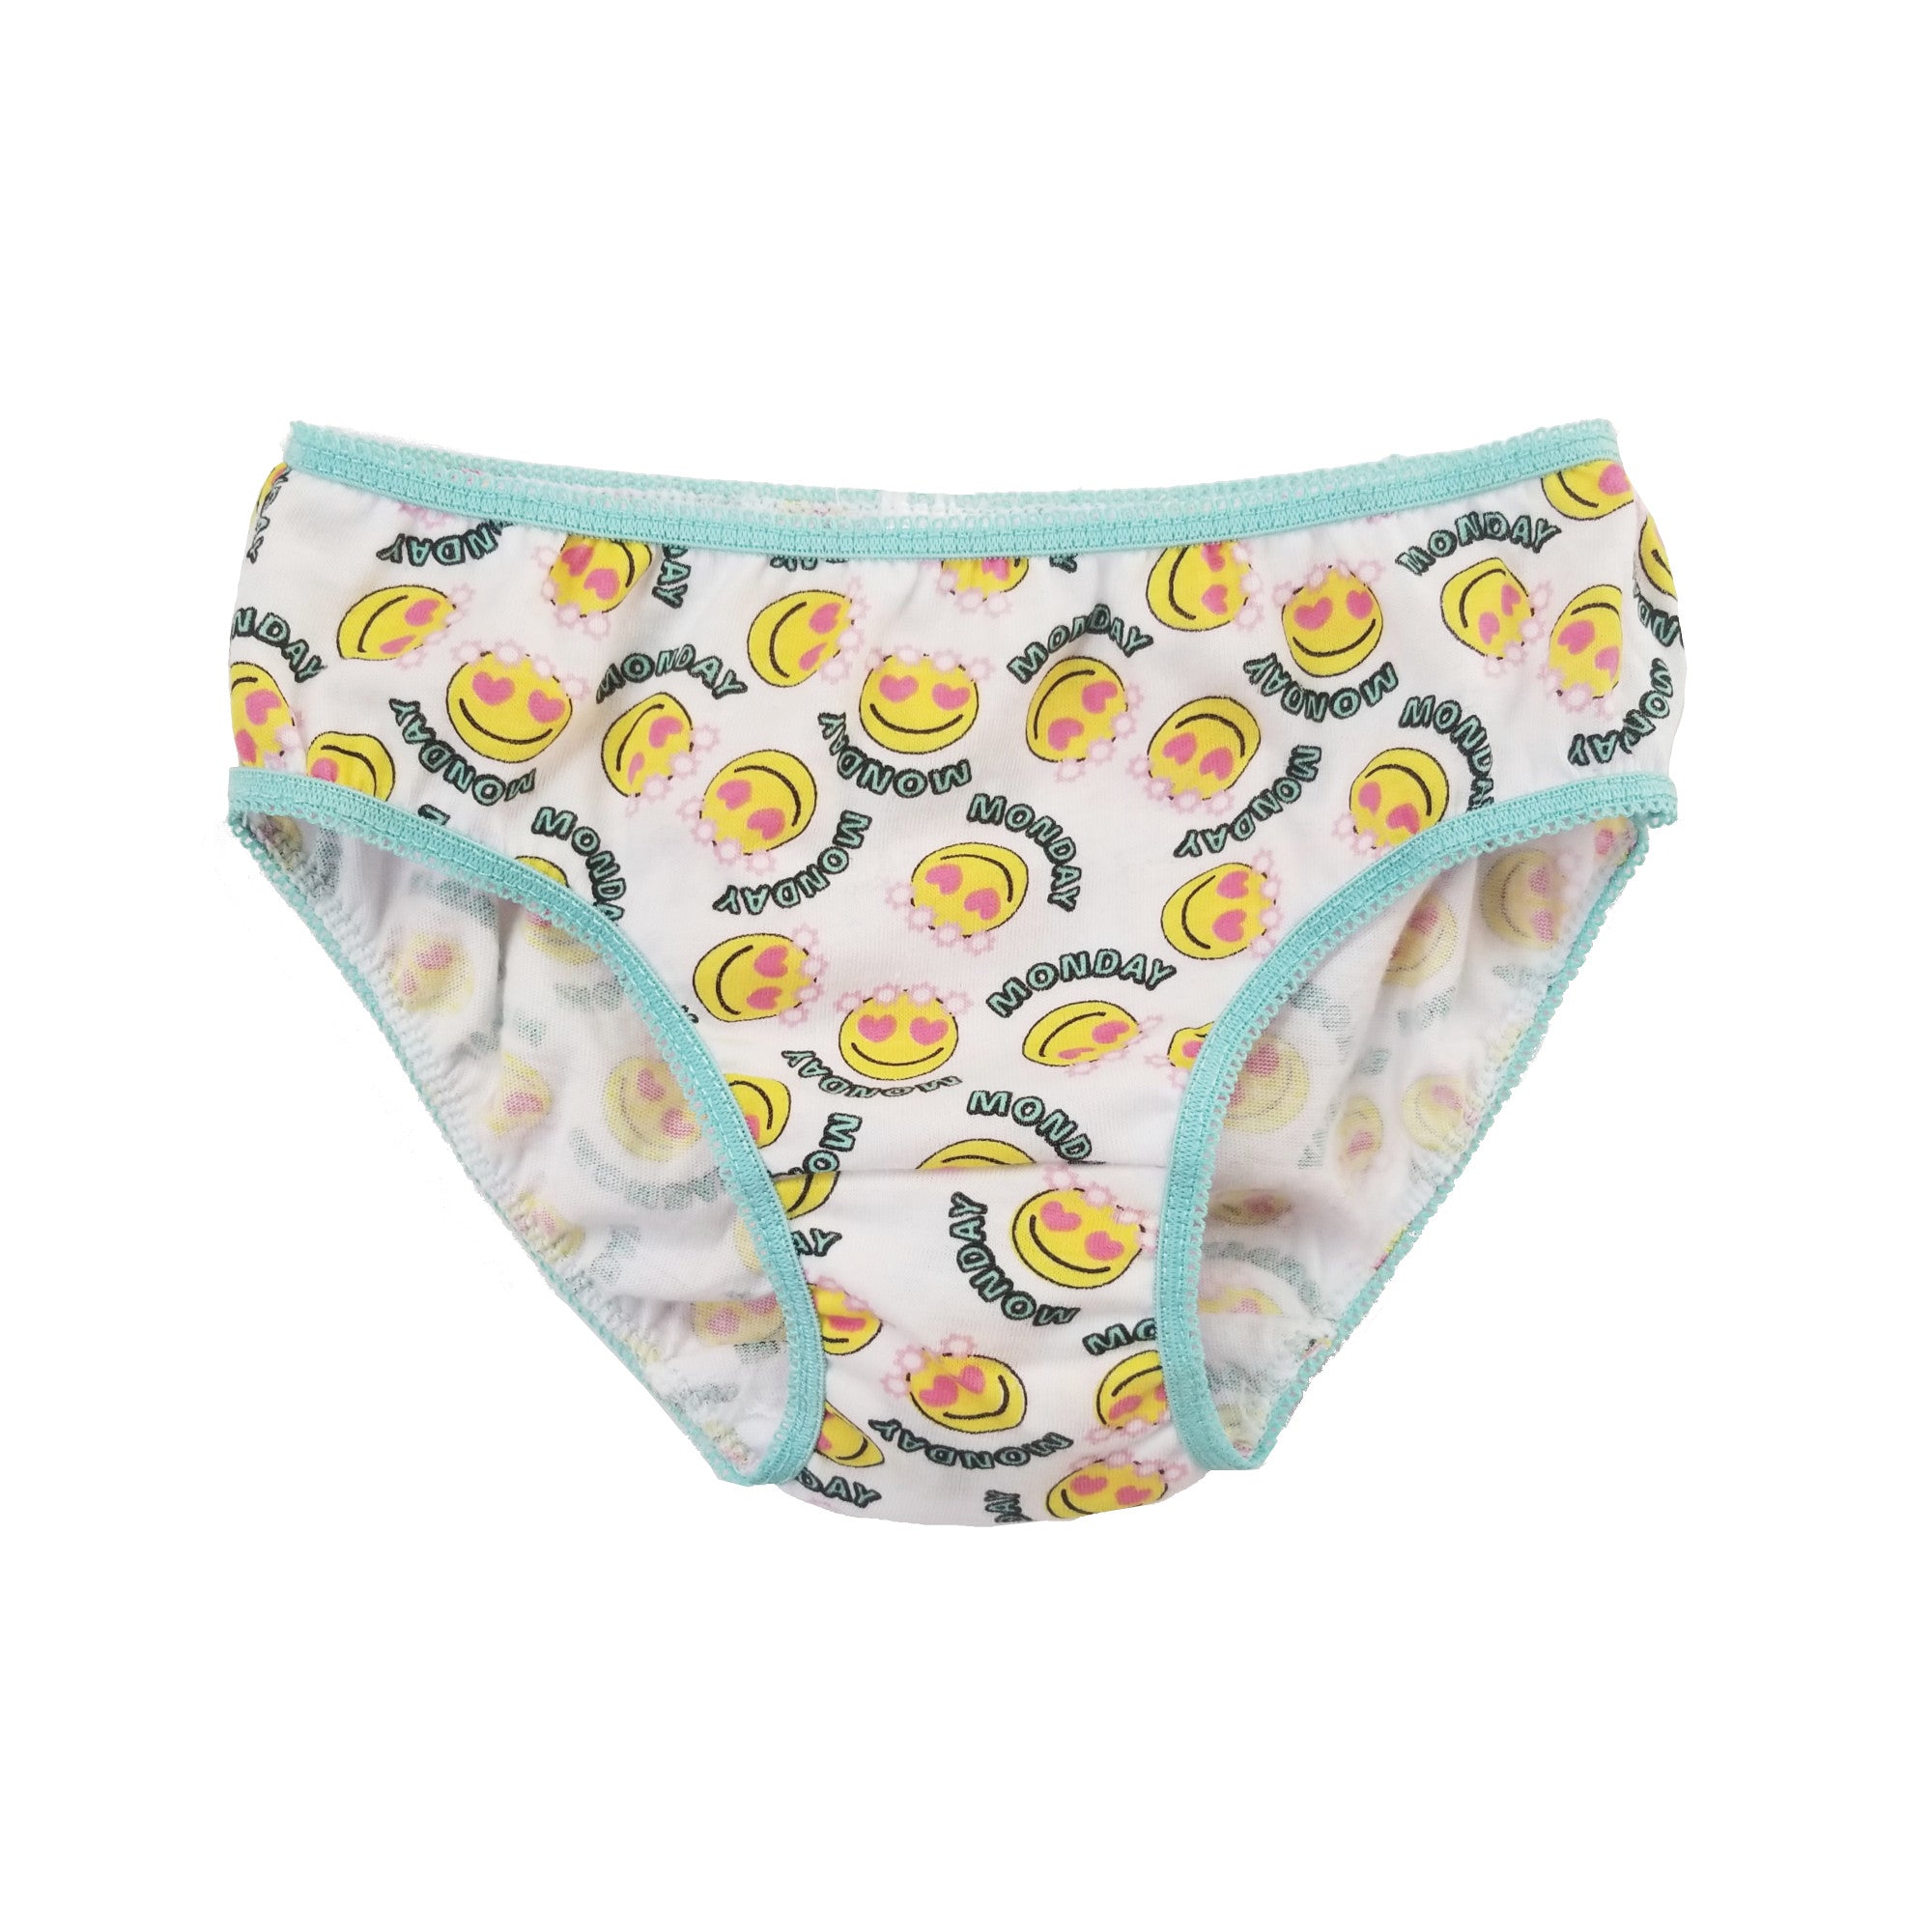 Popular Girls' Cotton Panty Underwear - Pack of 7